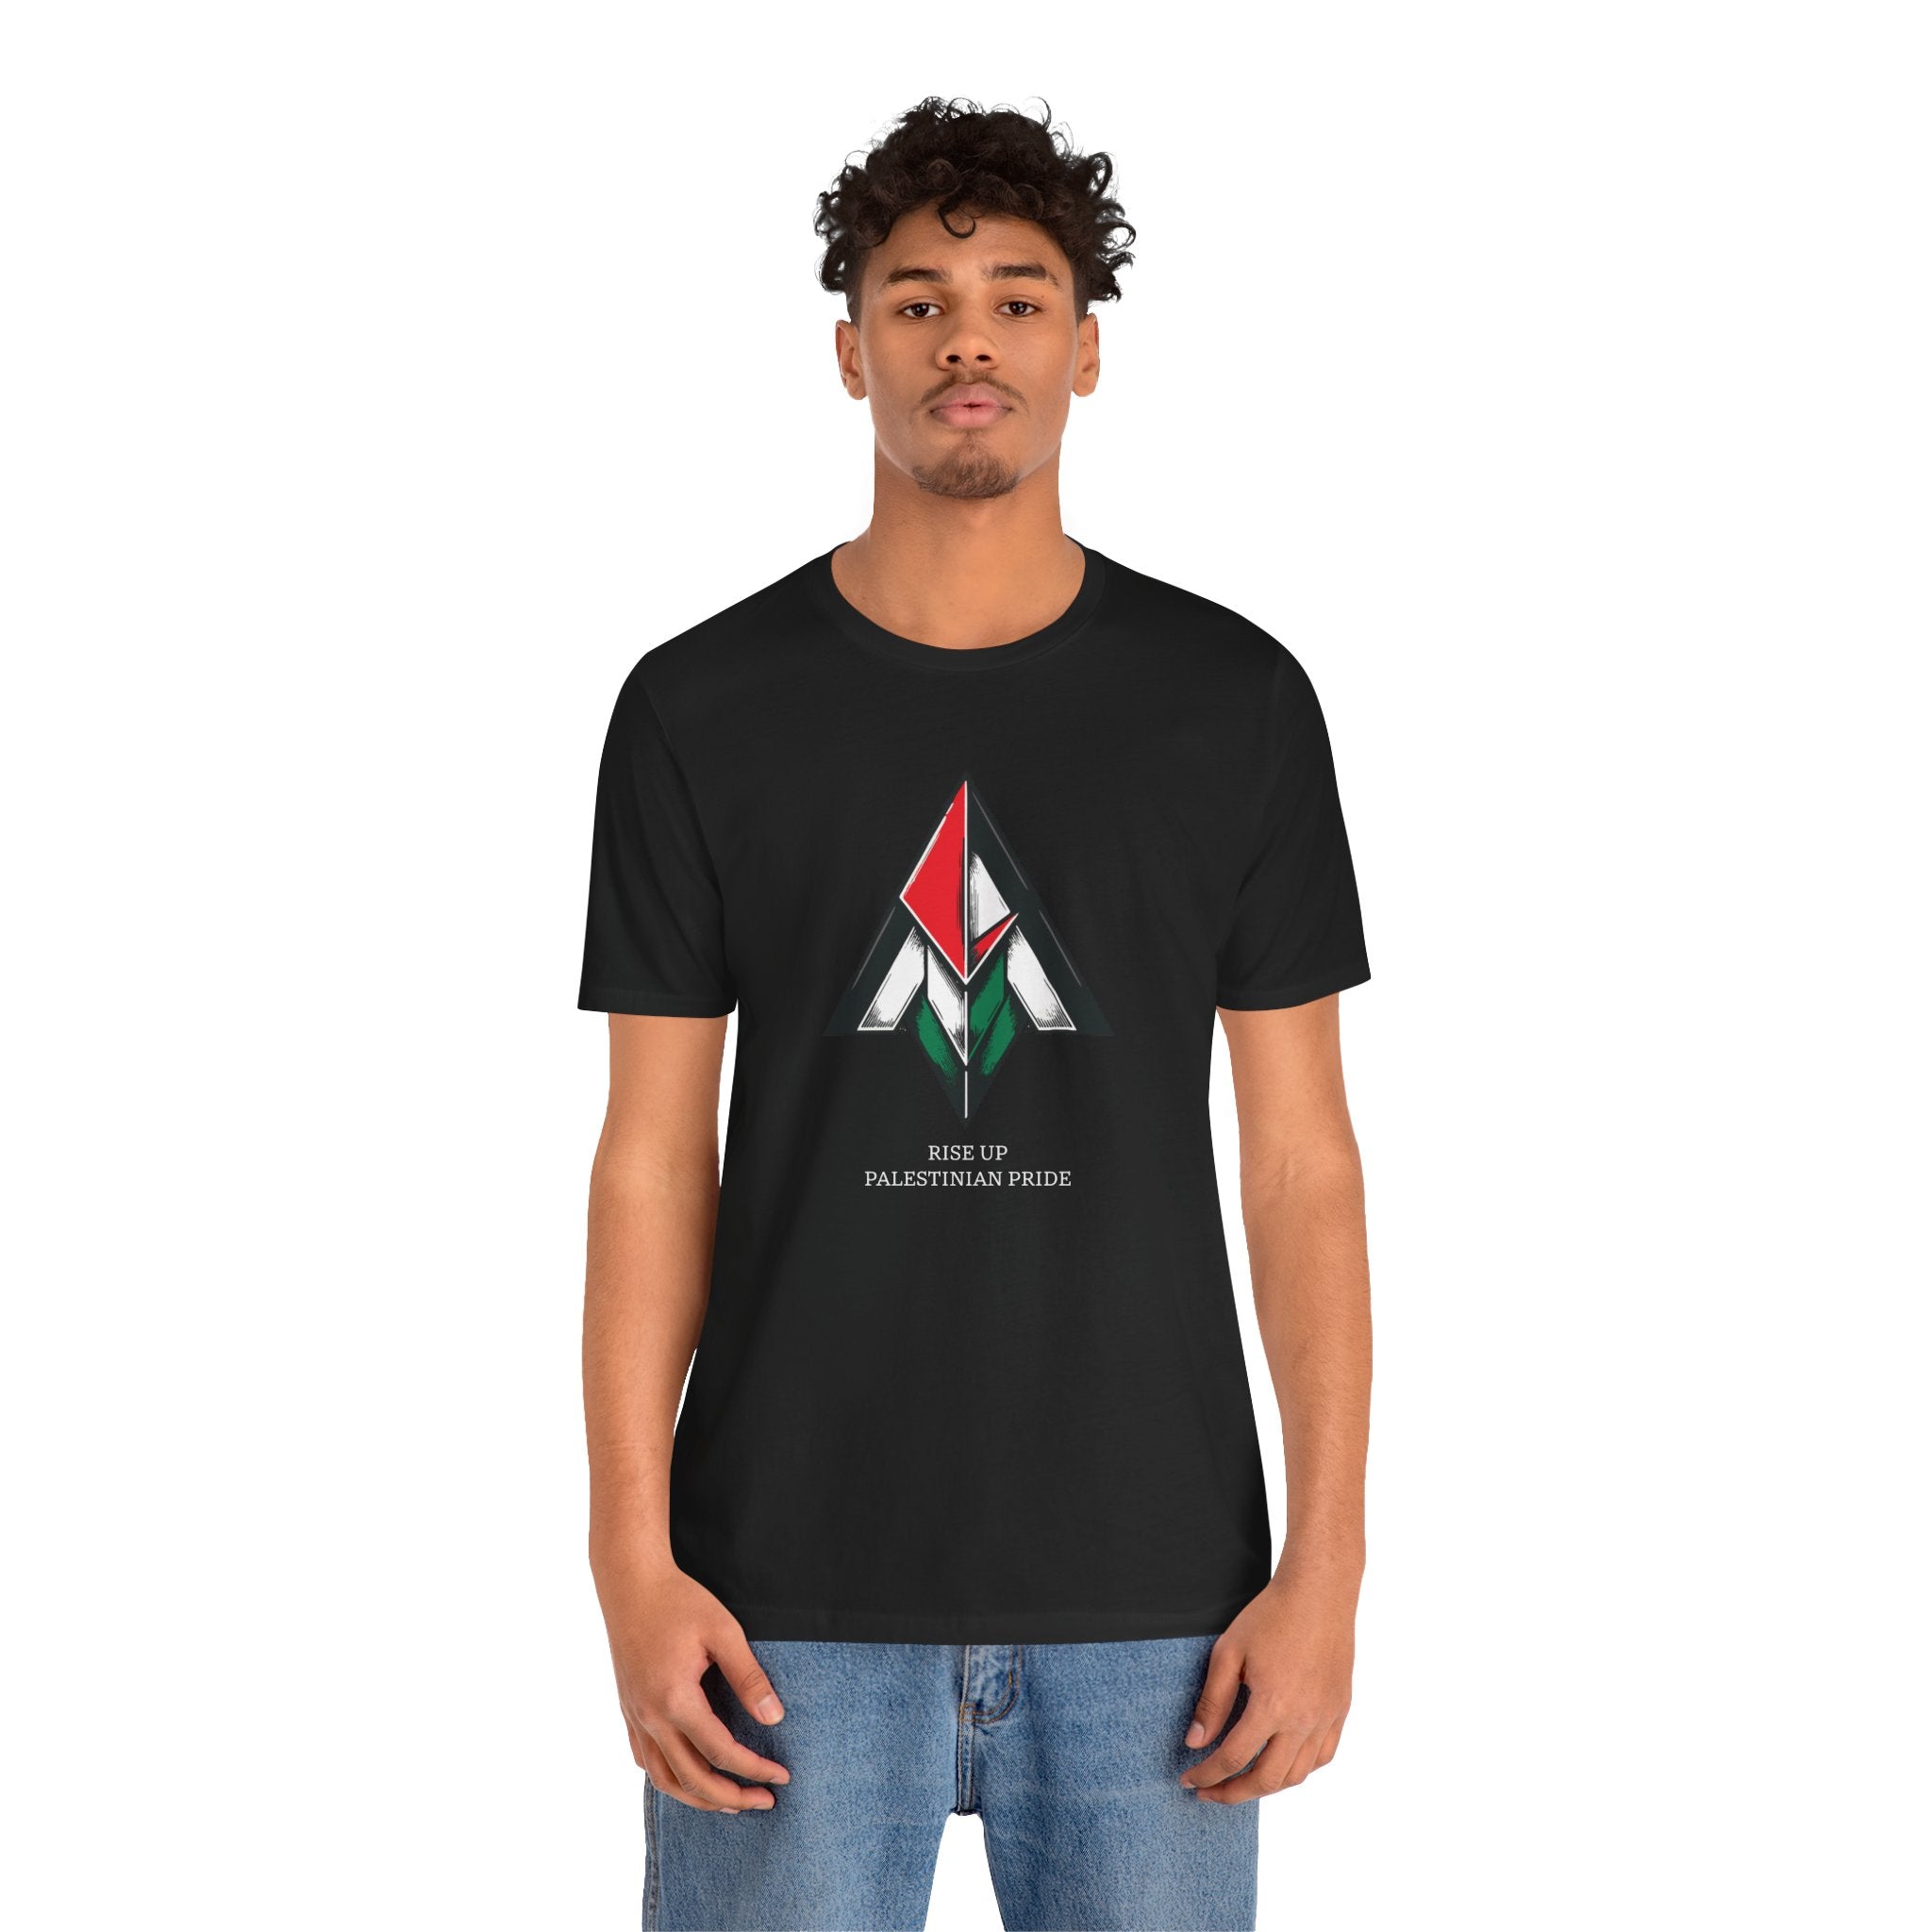 Palestinian Pride Triangle